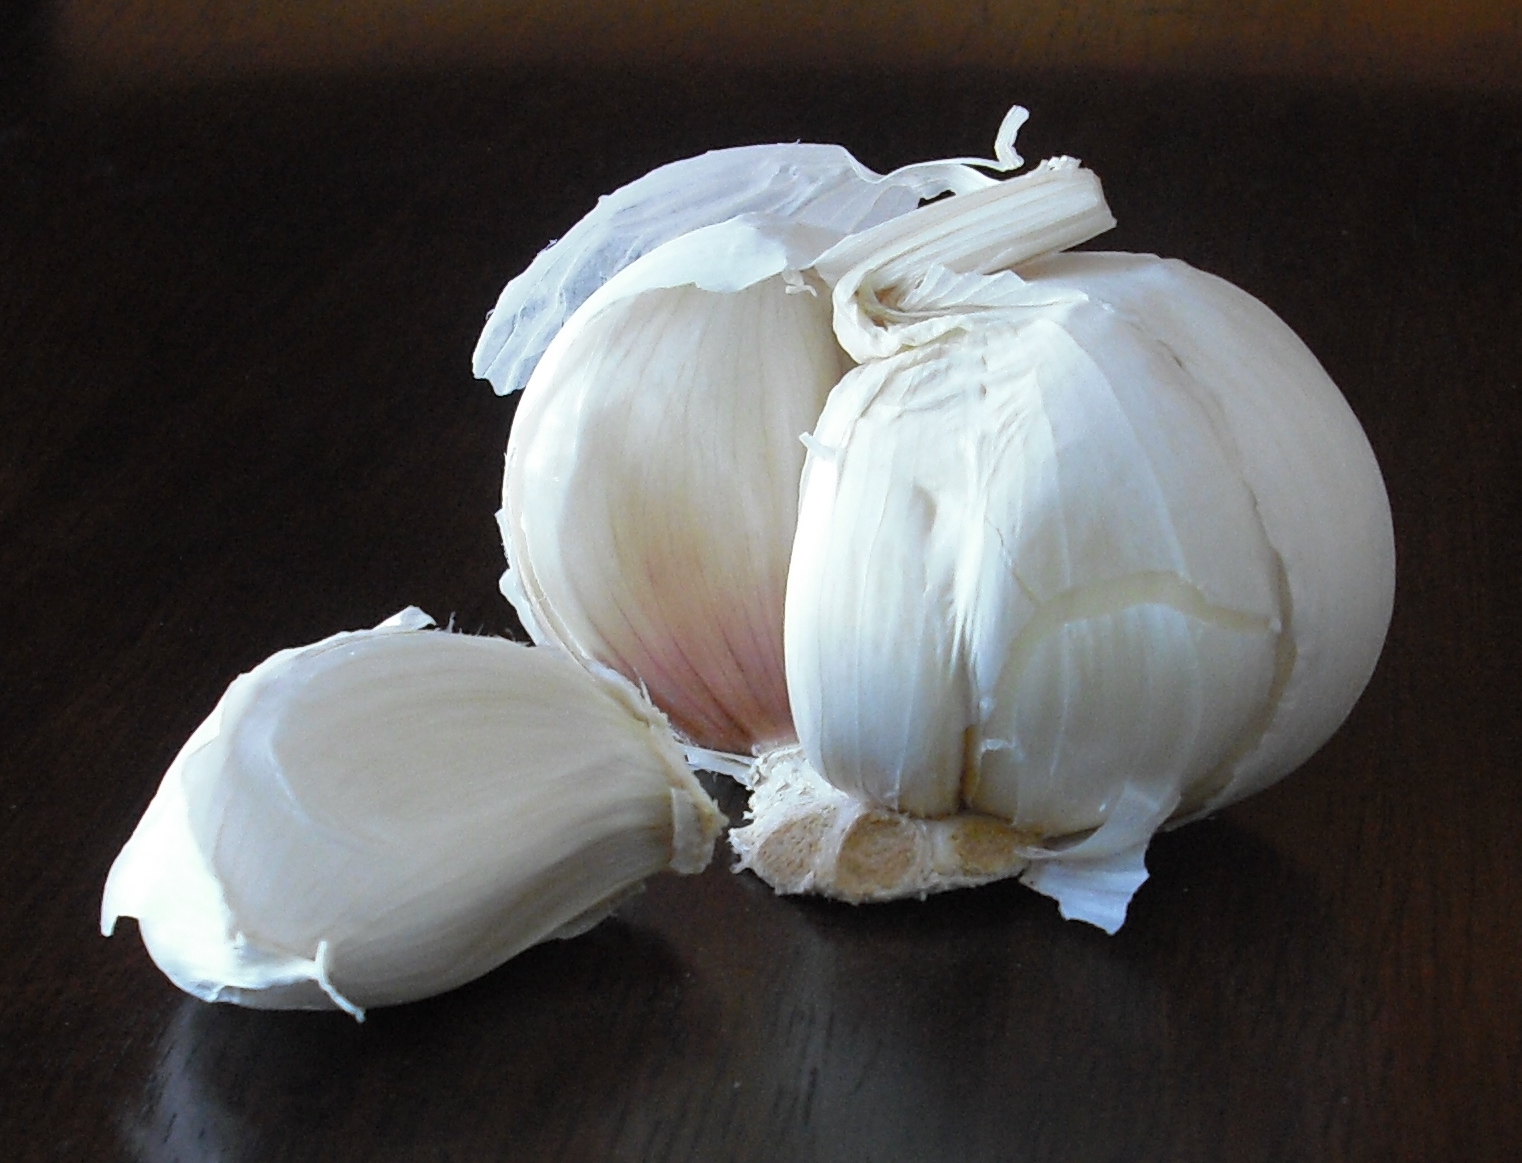 sekilas tentang bawang putih bawang putih allium sativum adalah 